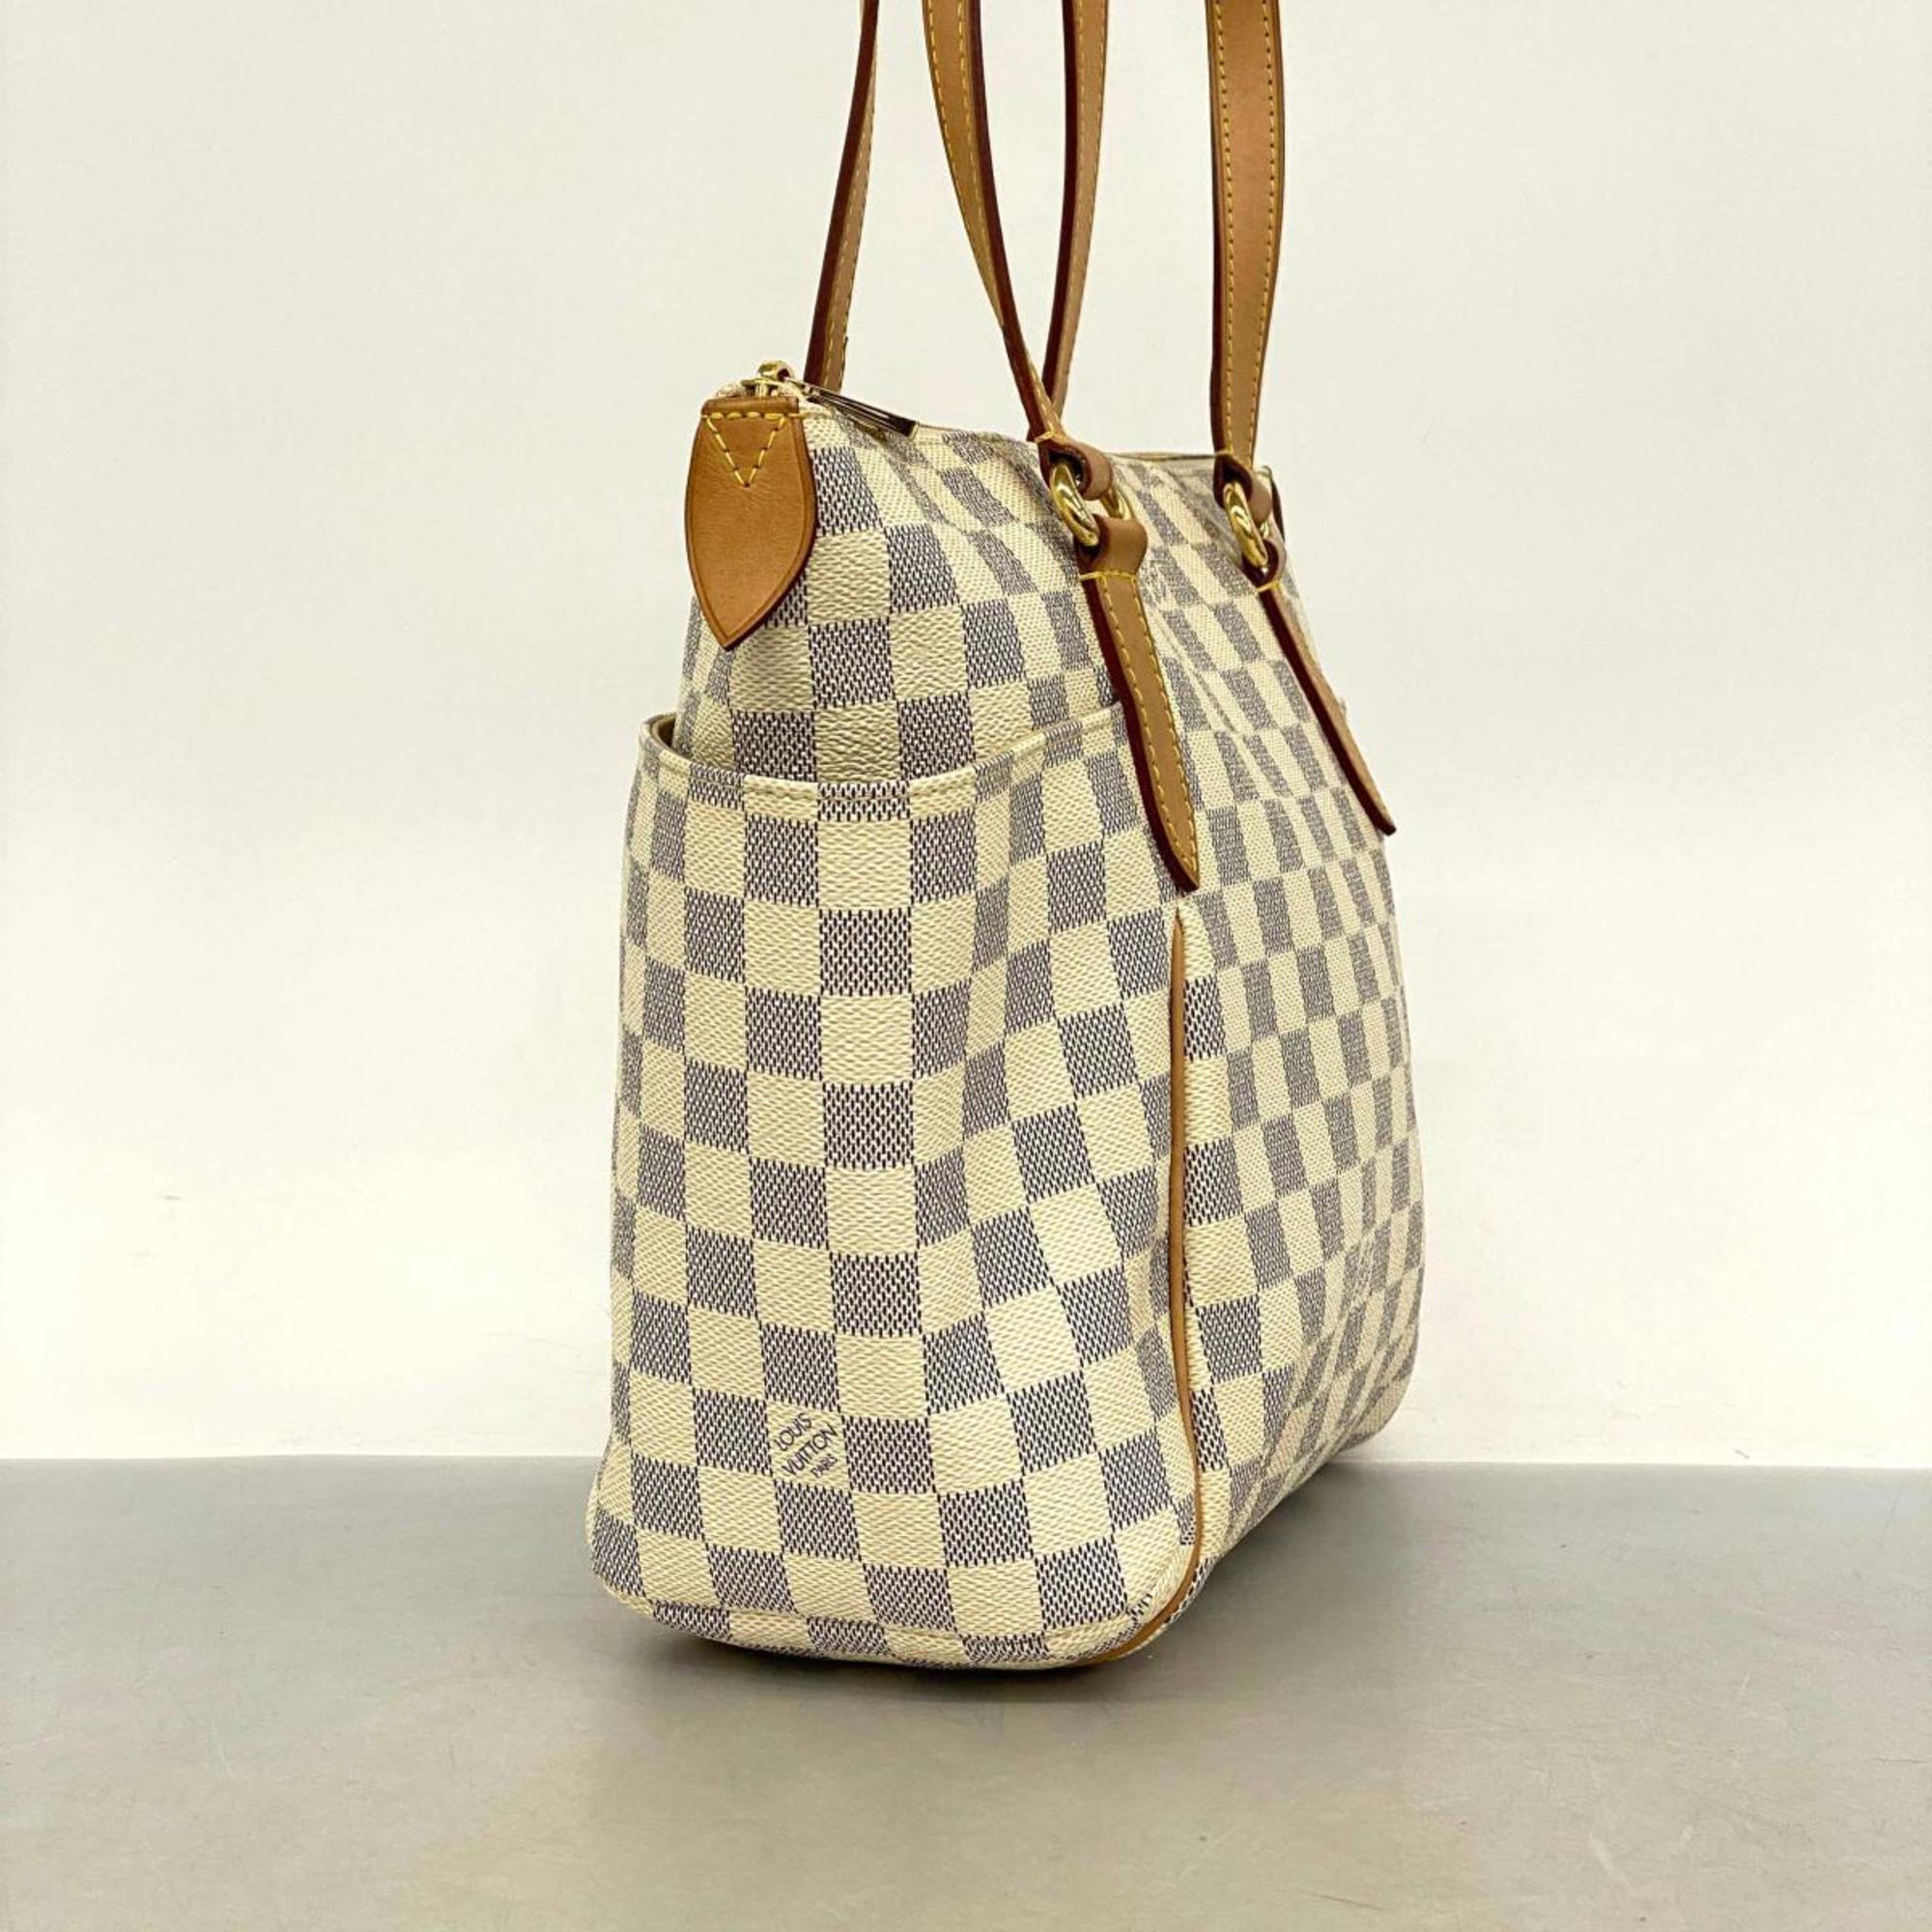 Louis Vuitton Tote Bag Damier Azur Totally PM N41280 White Women's